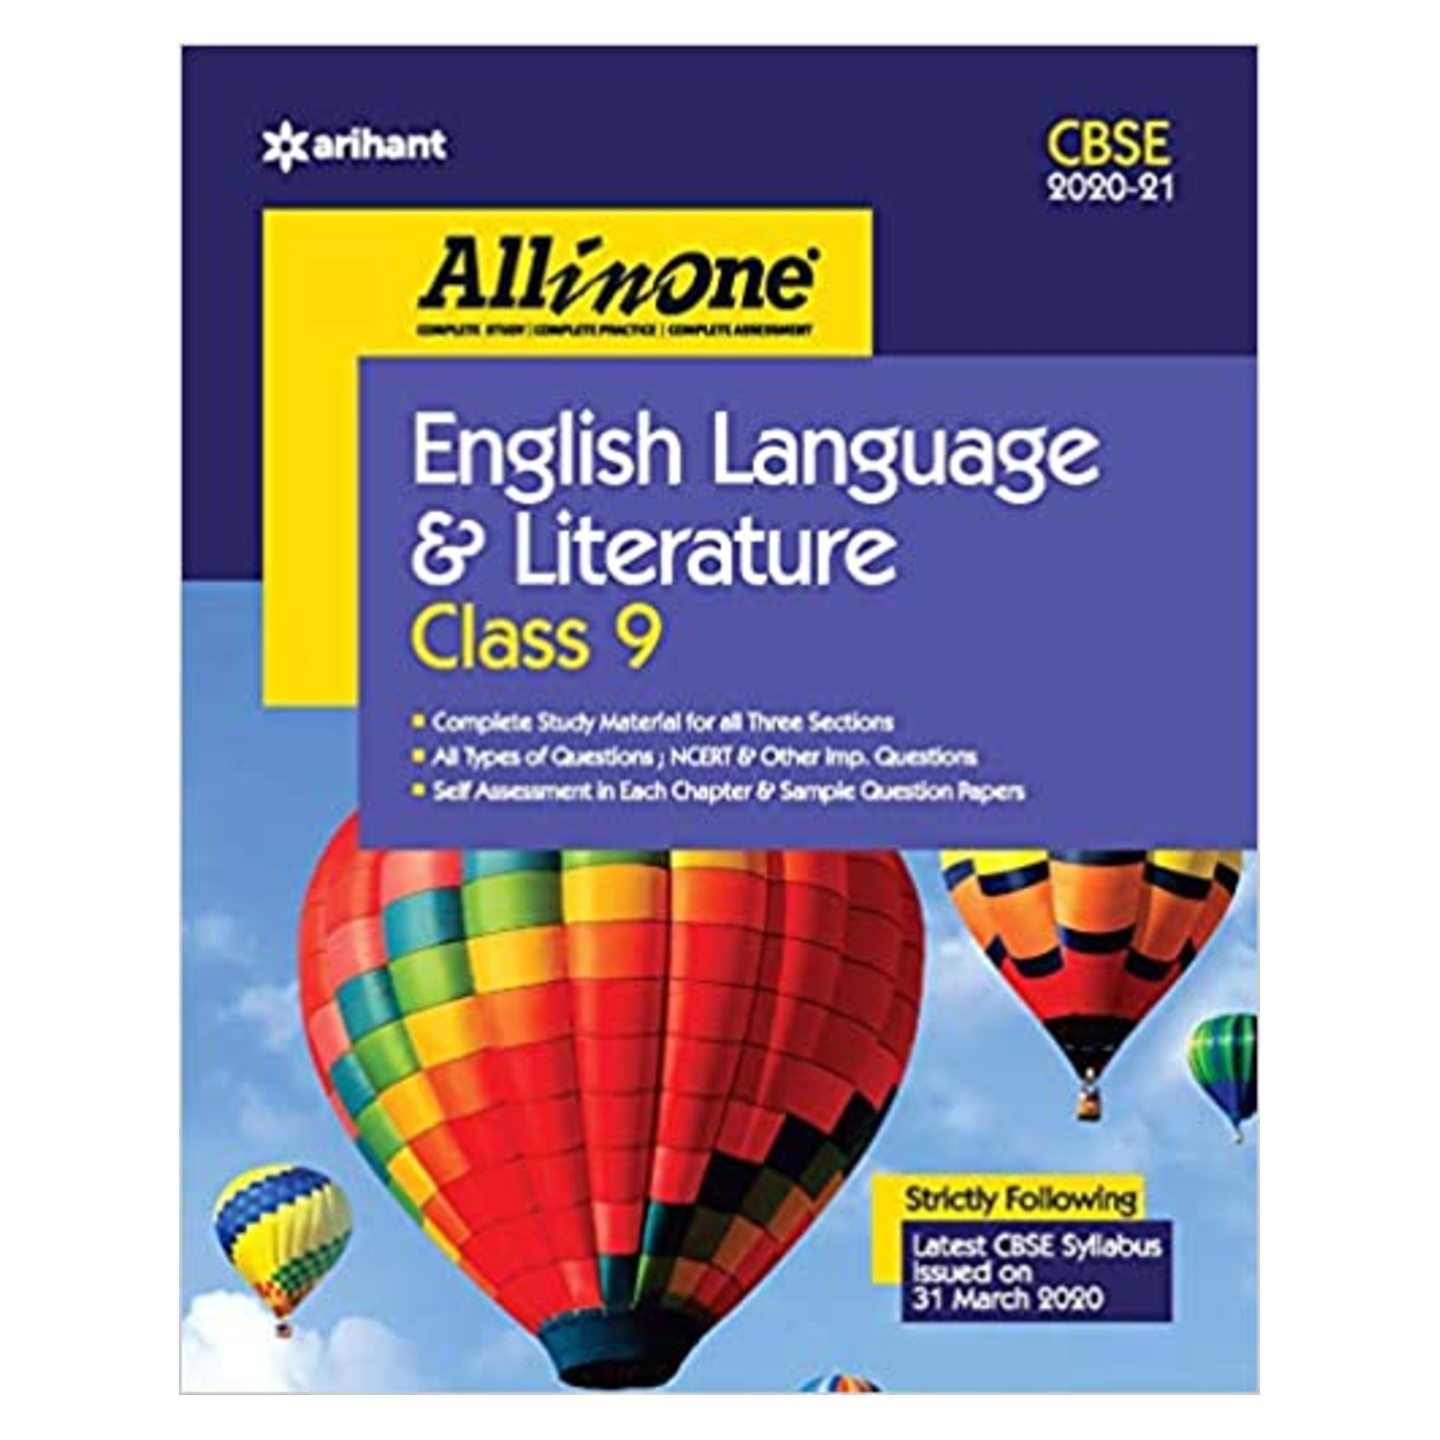 ARIHANT CBSE All in One English Language & Literature Class 9